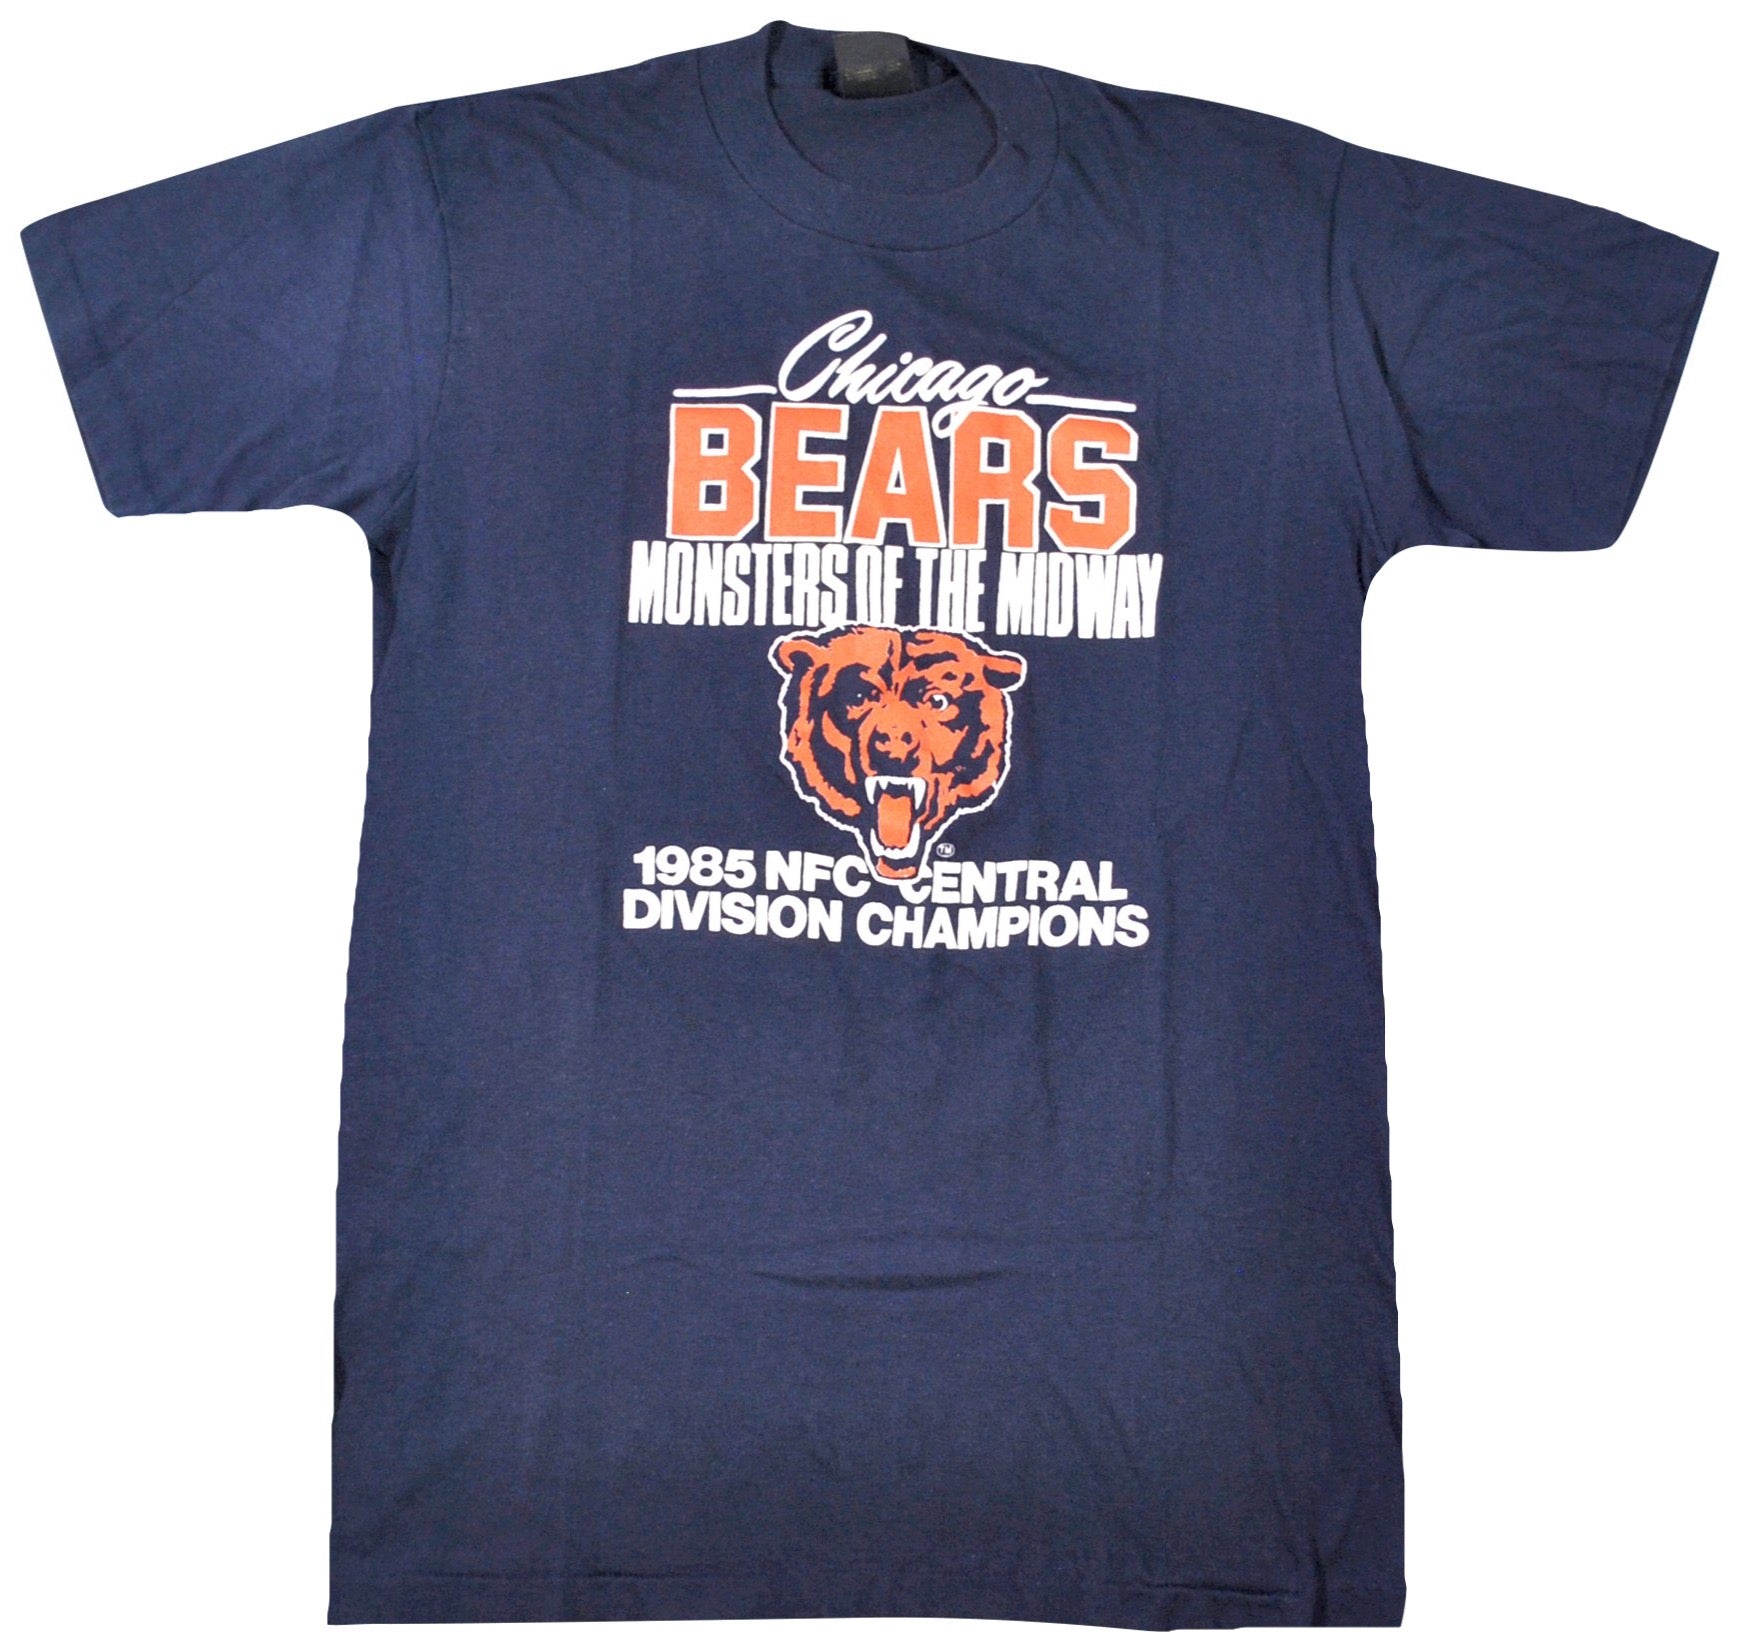 retro chicago bears shirt